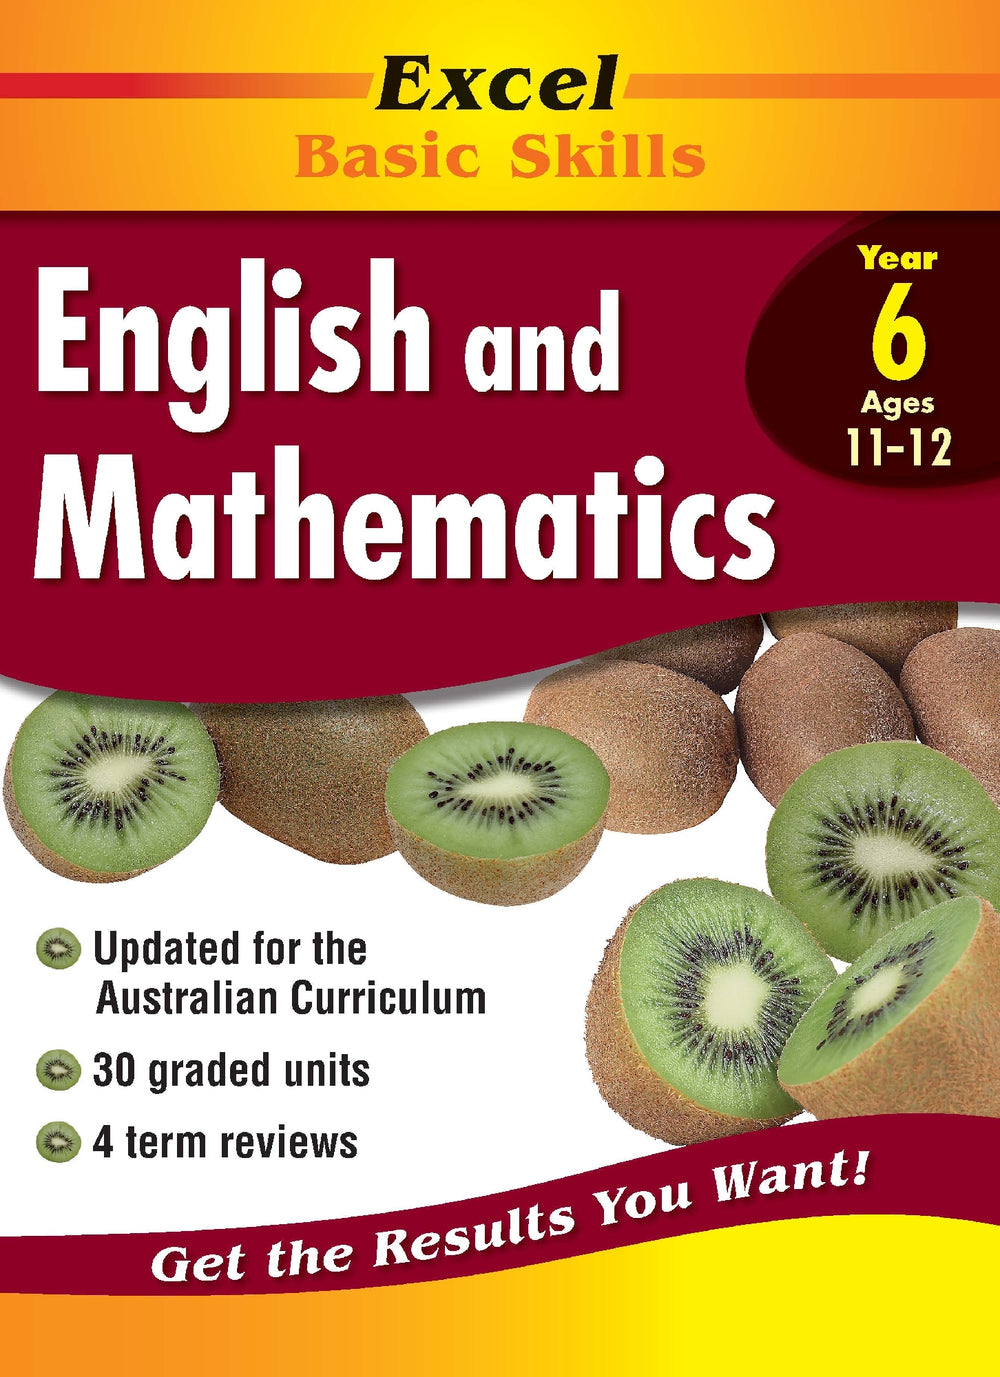 Excel Basic Skills Workbook: English and Mathematics Year 6